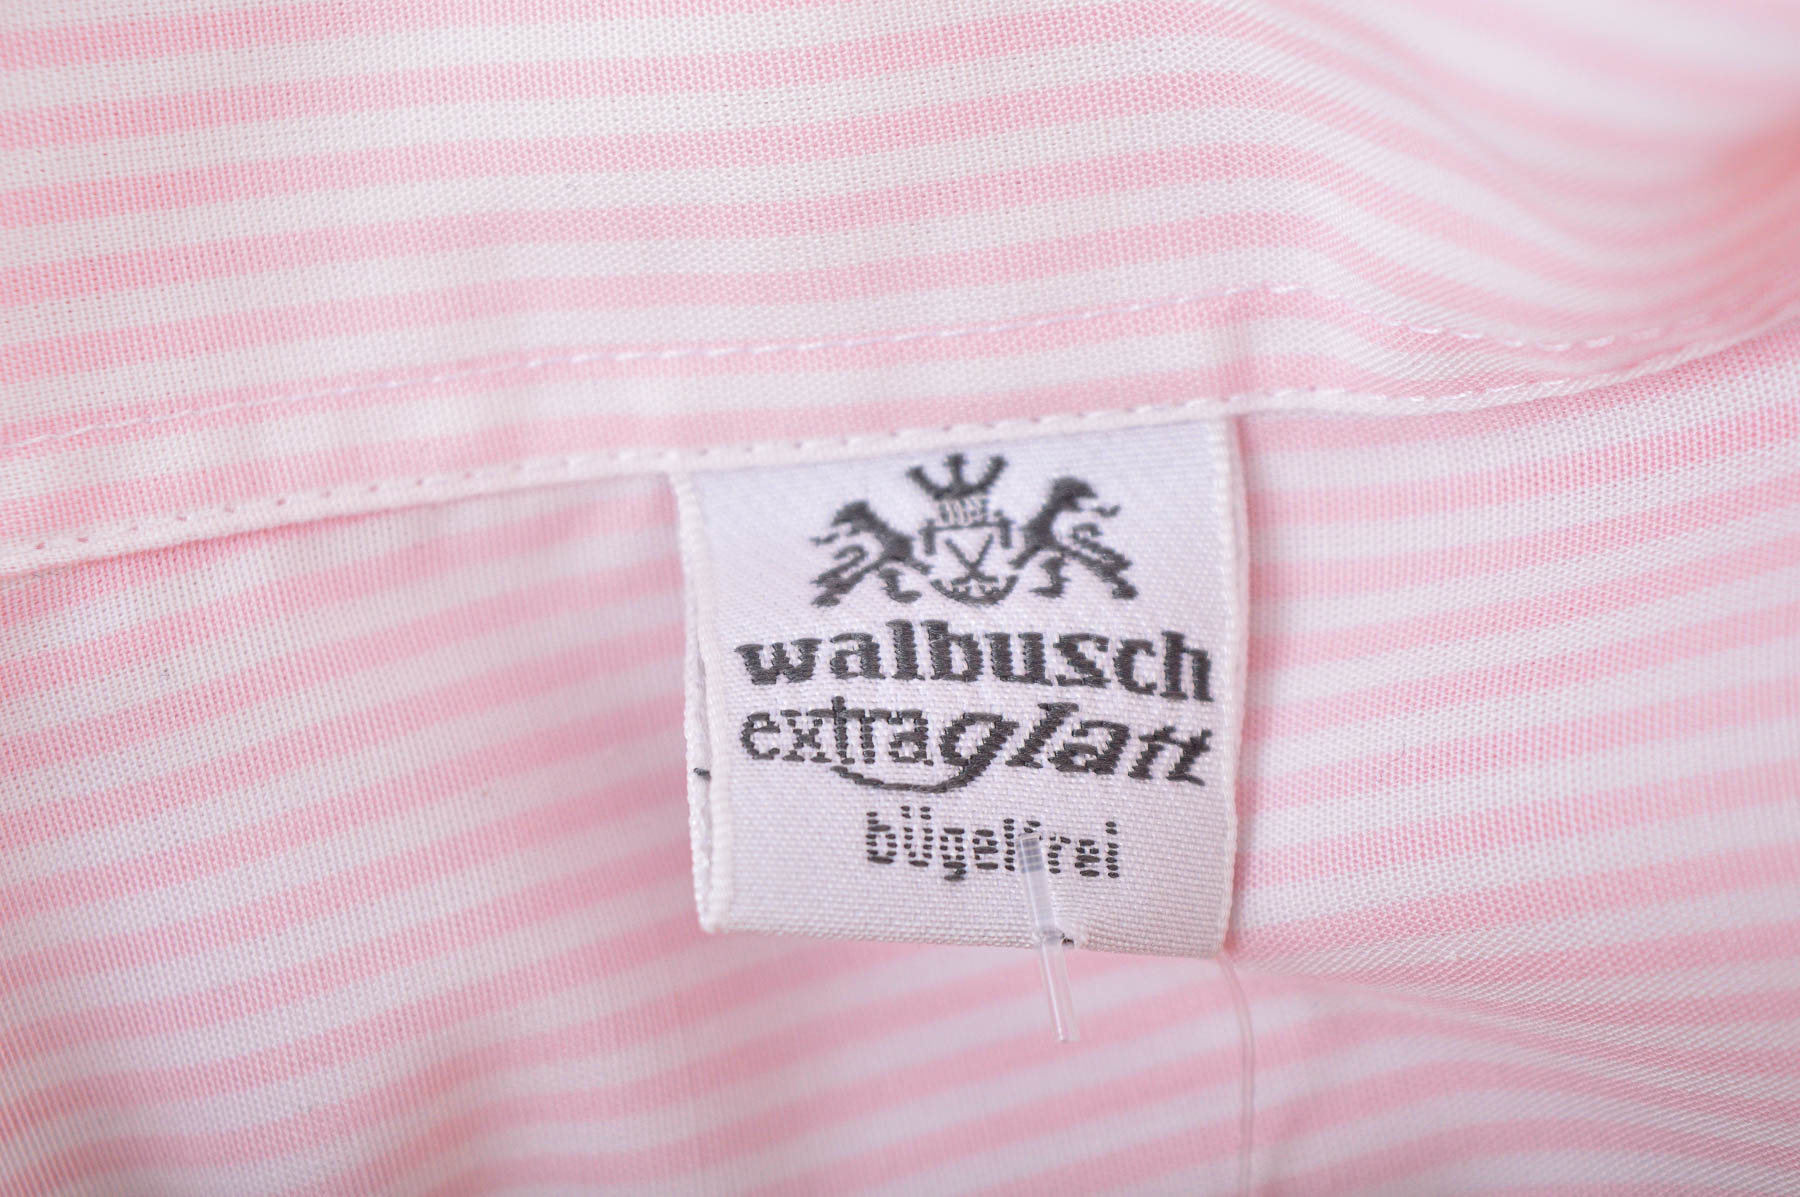 Дамска риза - Walbusch - 2